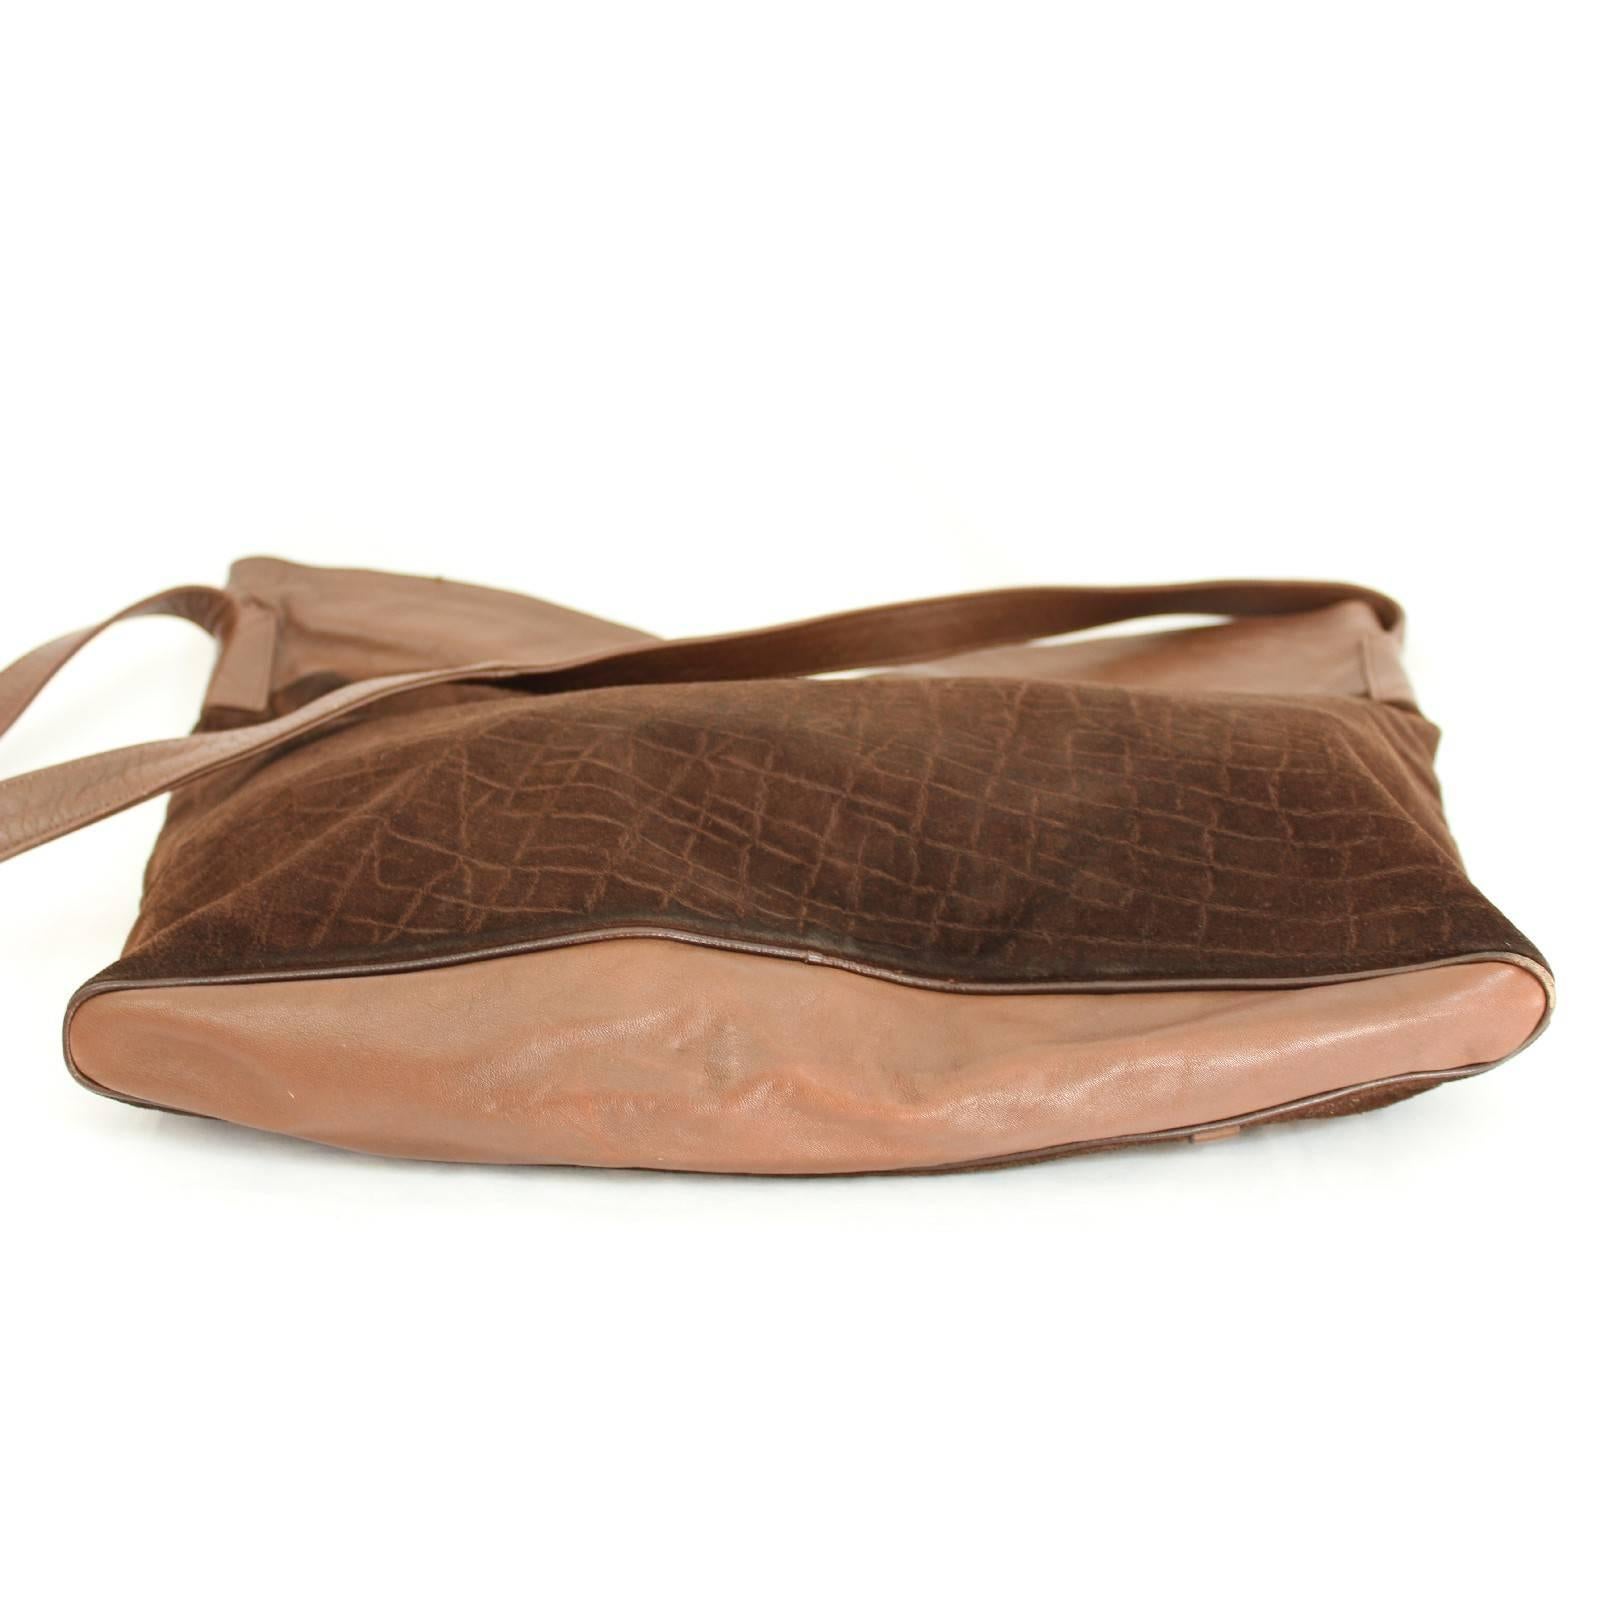 Ted Lapidus Paris brown leather tote bag with zip closure shoulder strap, made France.

Length: 34 cm
Width: 44 cm
Depth: 4 cm

Color: brown
Composition: leather
Condition: Excellent Condition